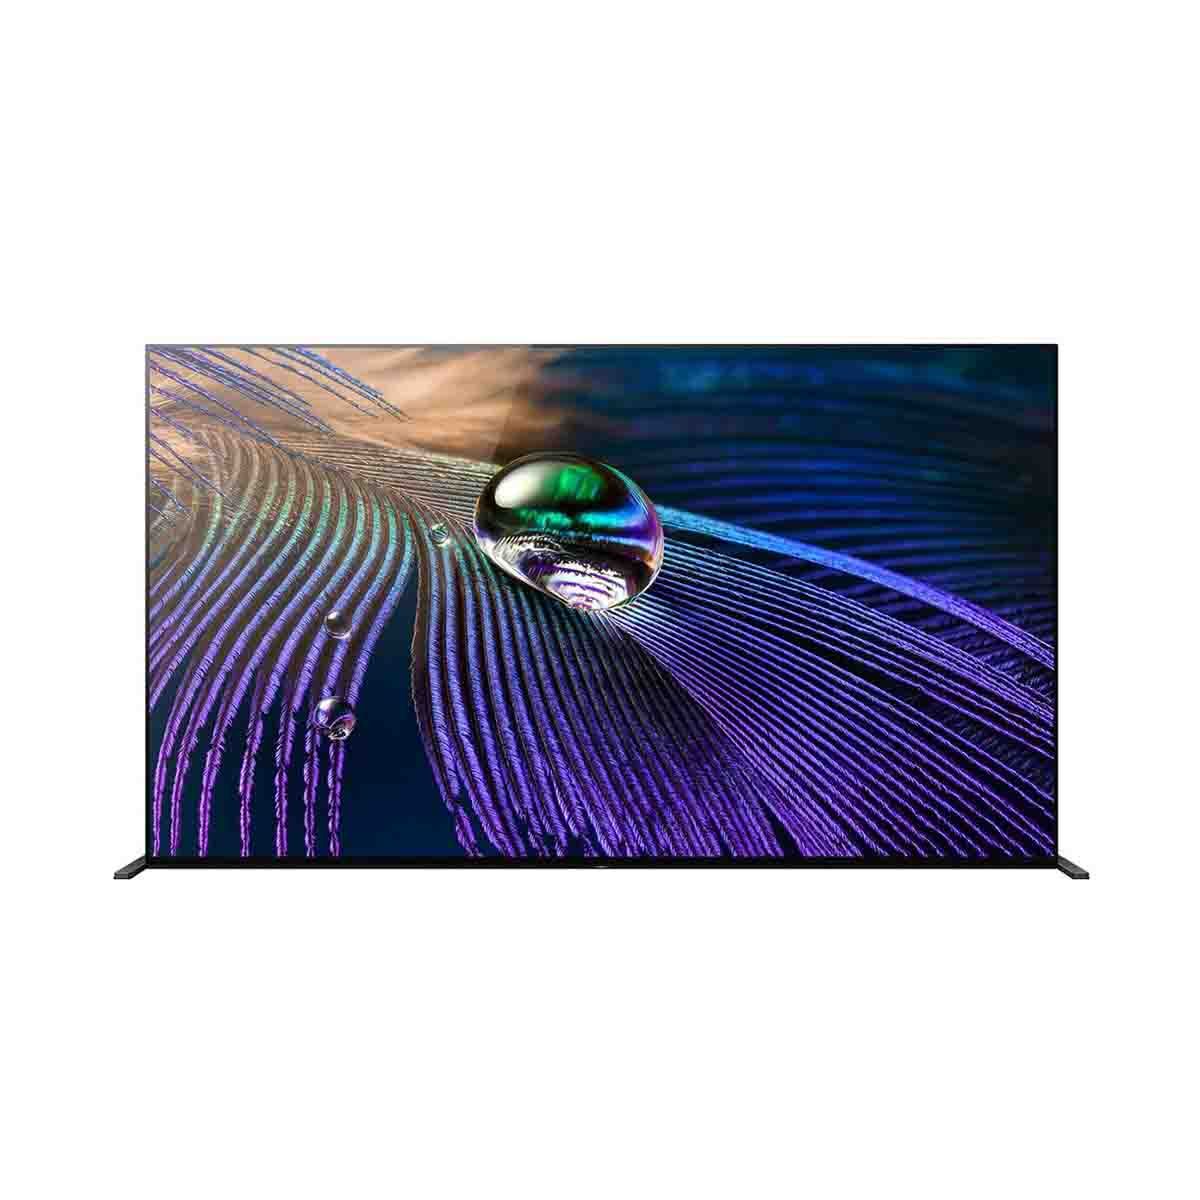 SONY BRAVIA OLED TV Google TV 4K รุ่น  XR-65A90J High Dynamic Range HDR  OLED TV 120 Hz